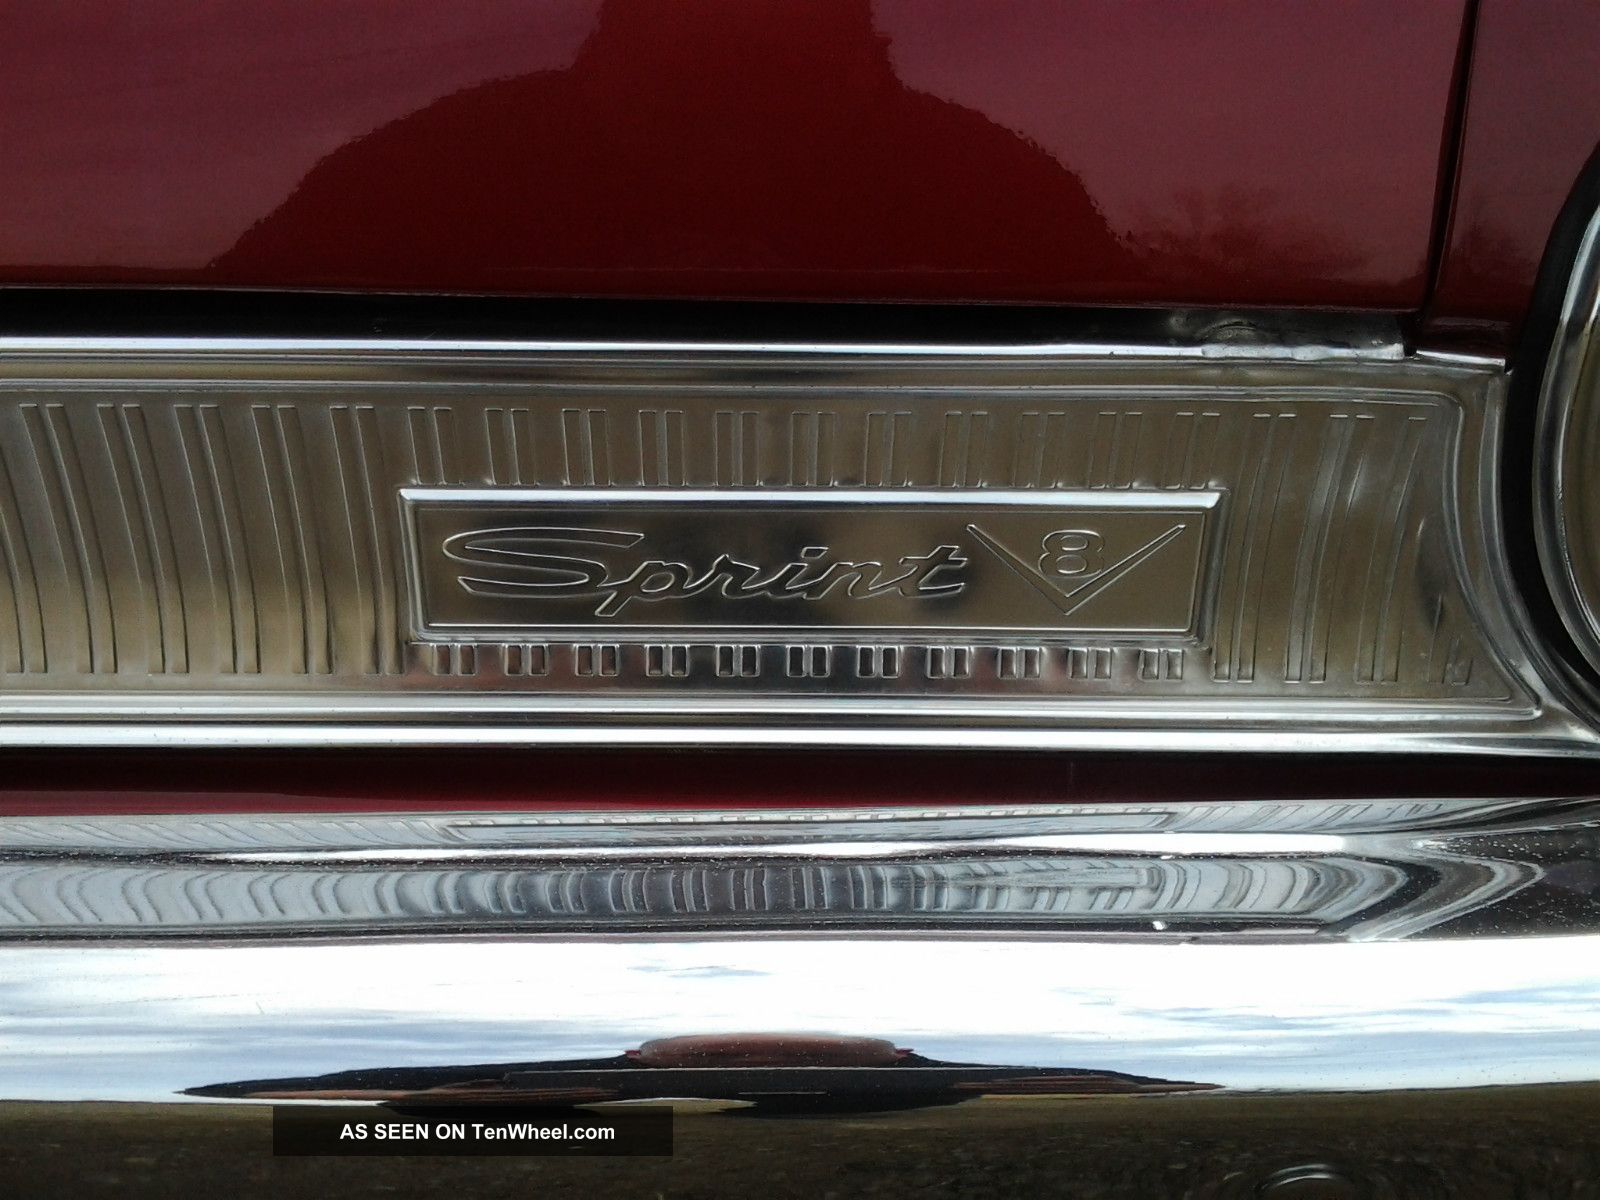 1964 Ford Falcon Coupe